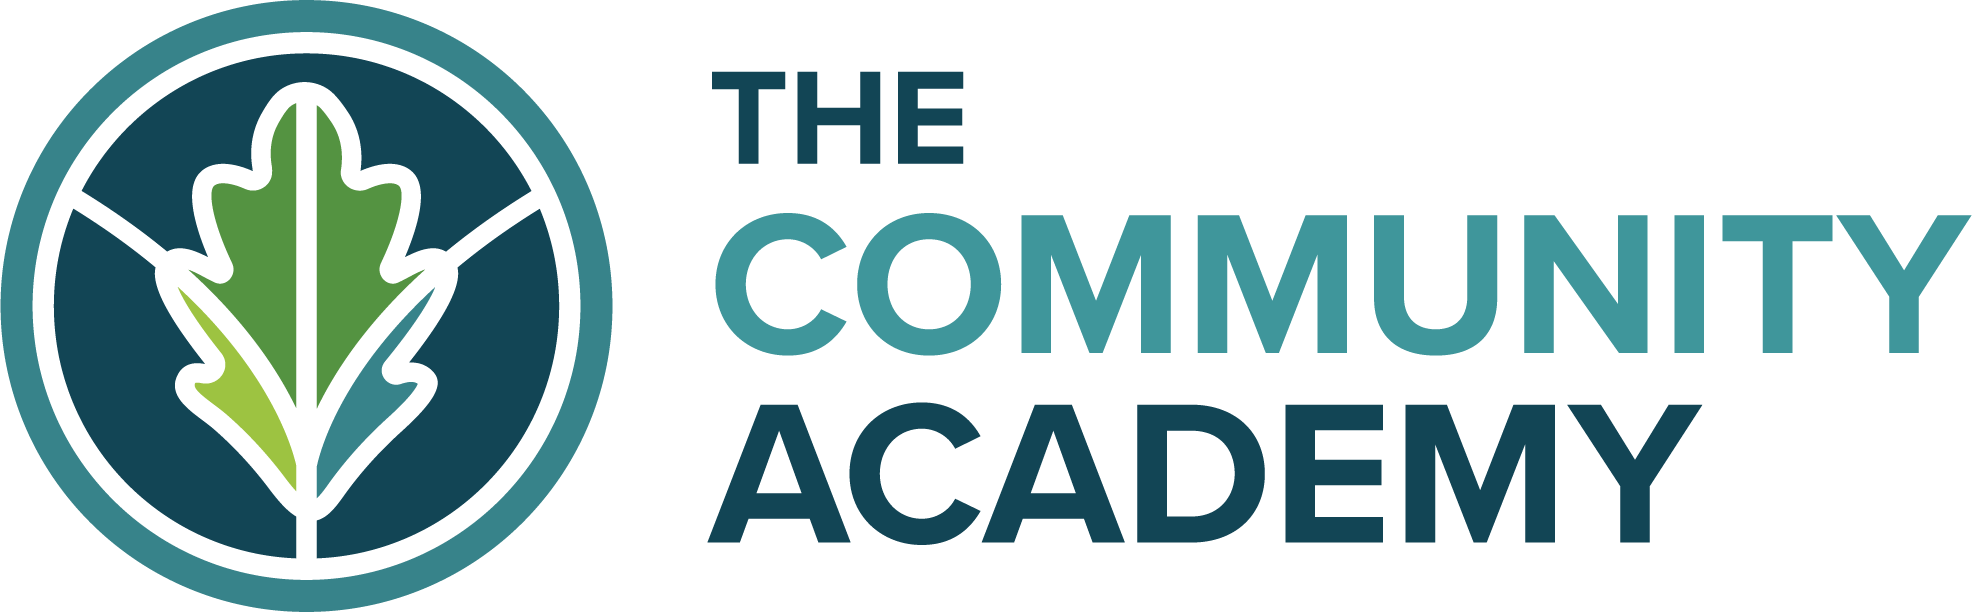 The Community Academy